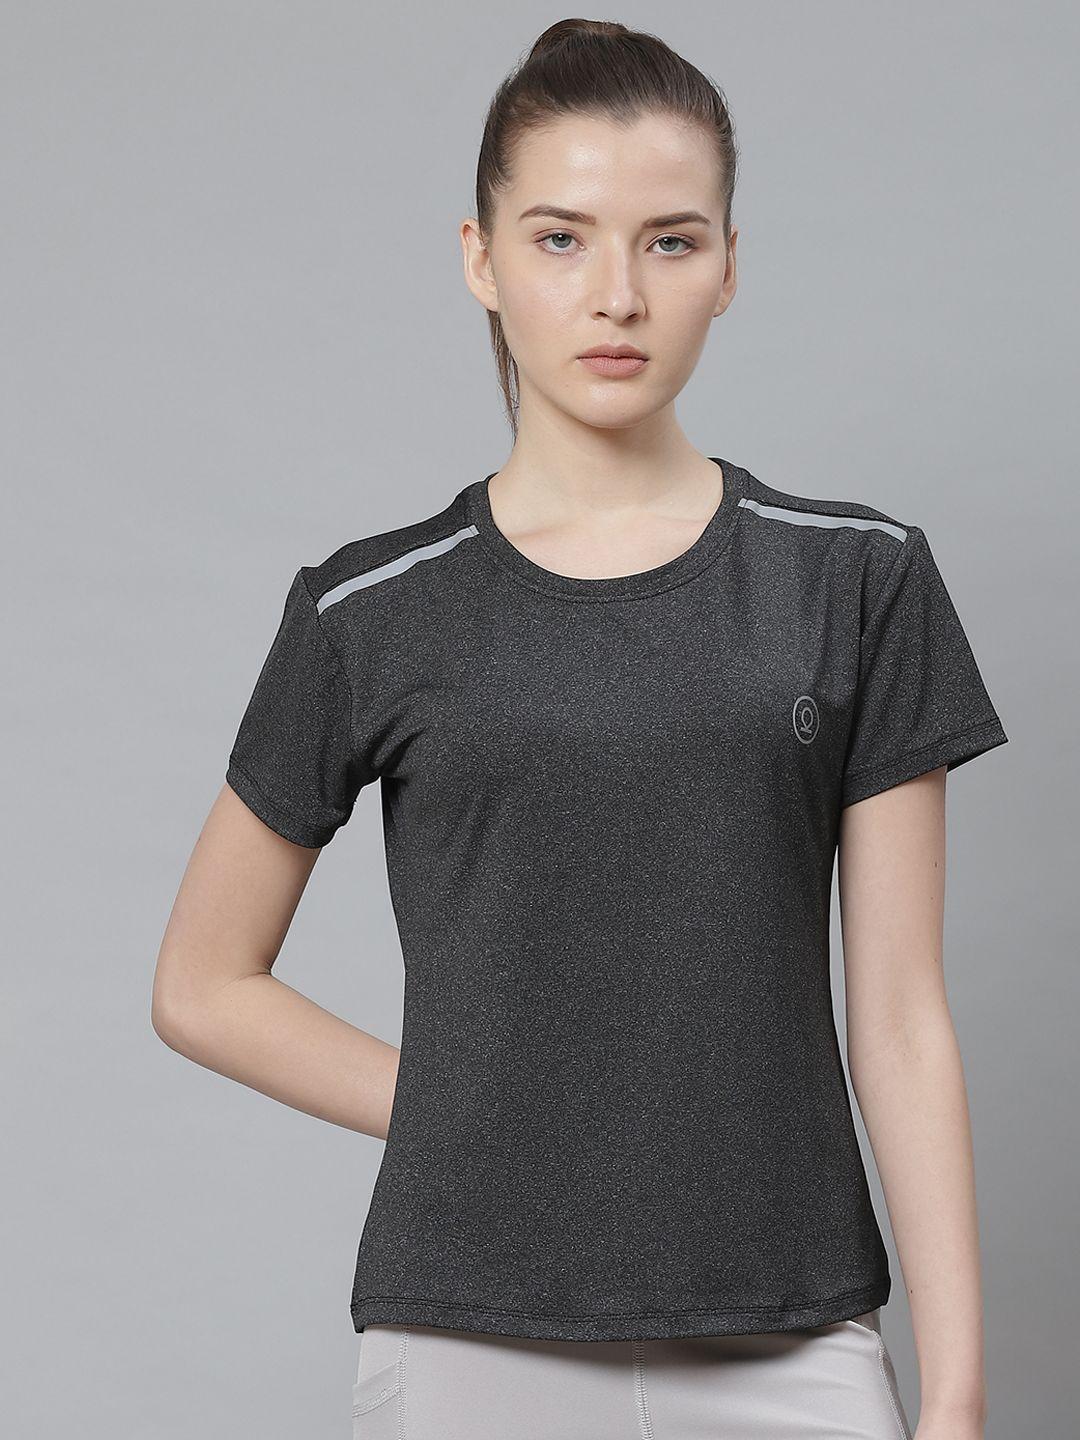 chkokko-women-charcoal-grey-solid-round-neck-yoga-t-shirt